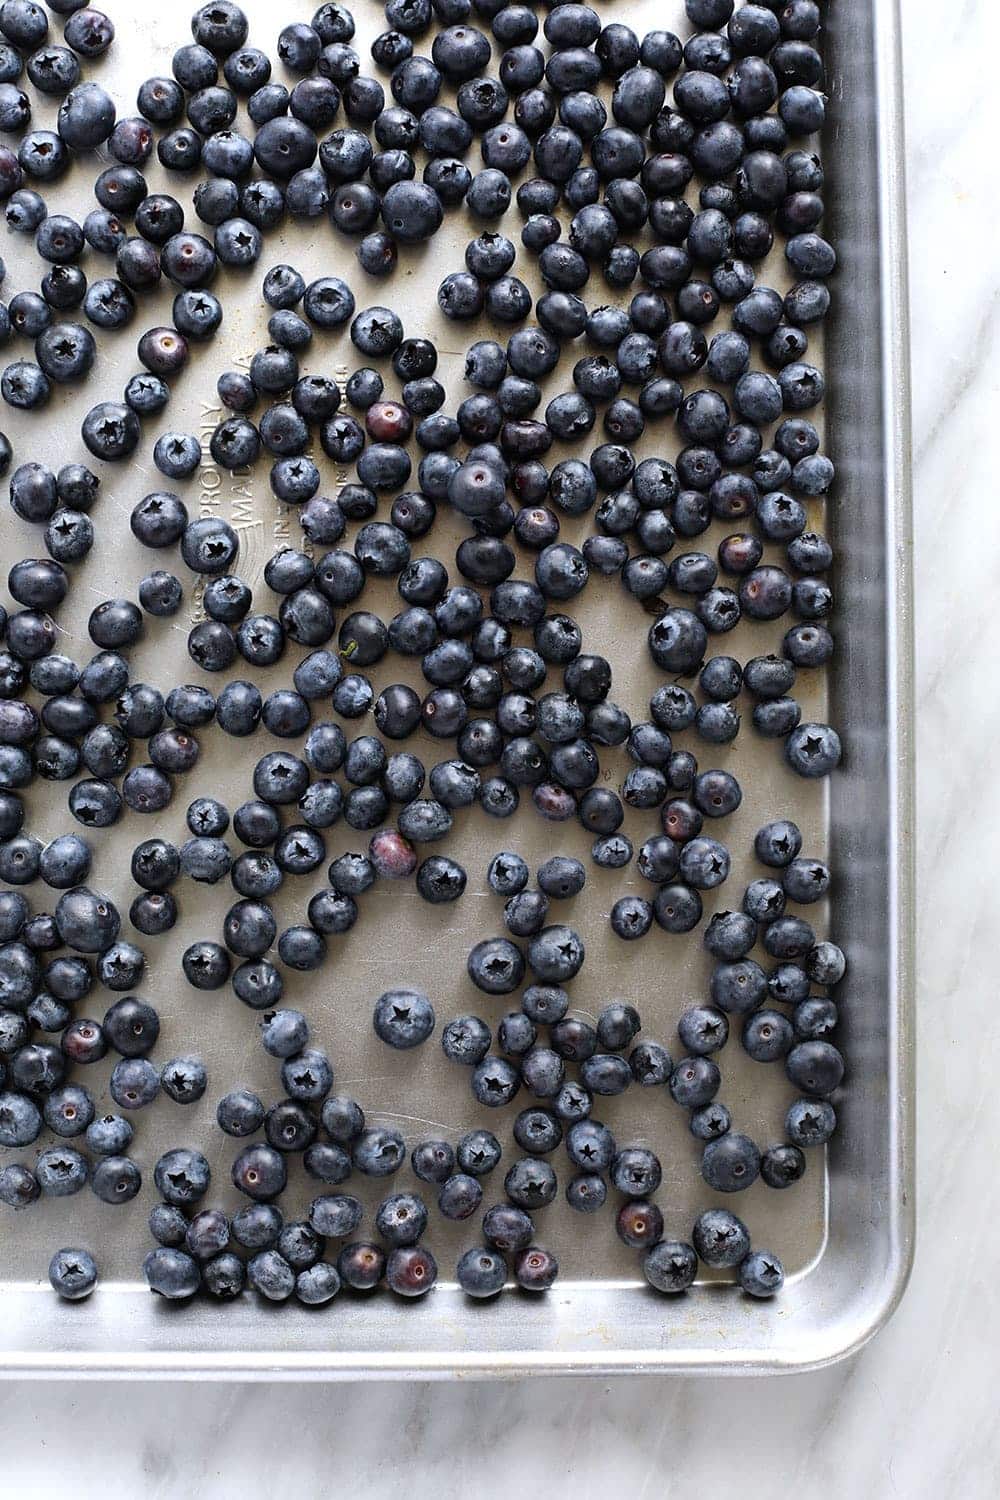 frozen blueberries on a baking sheet